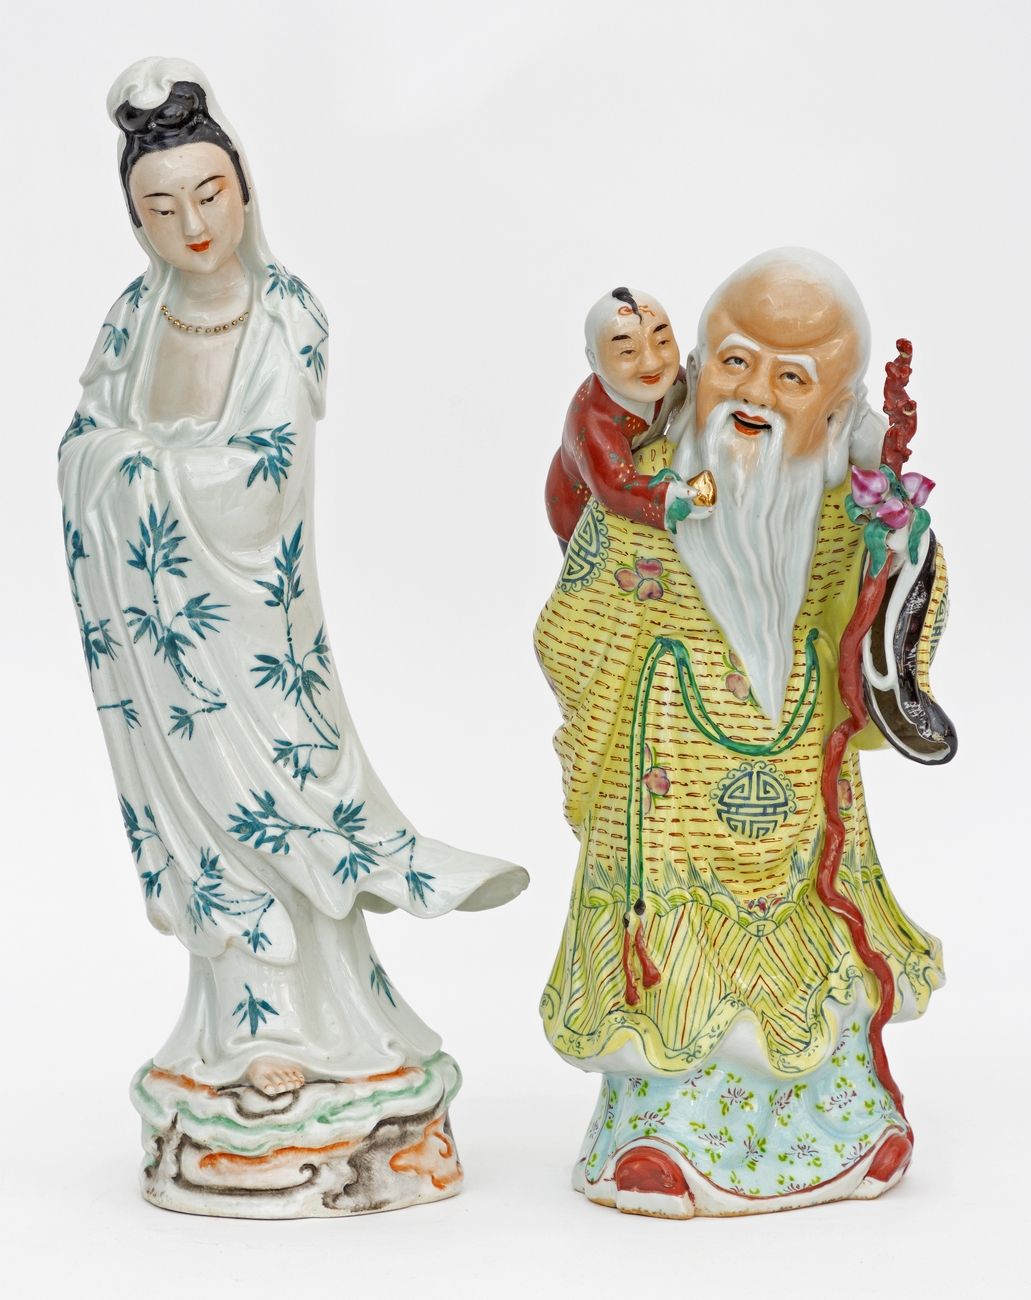 Null China, siglo XX
Lote de dos estatuas de porcelana que representan un sabio &hellip;